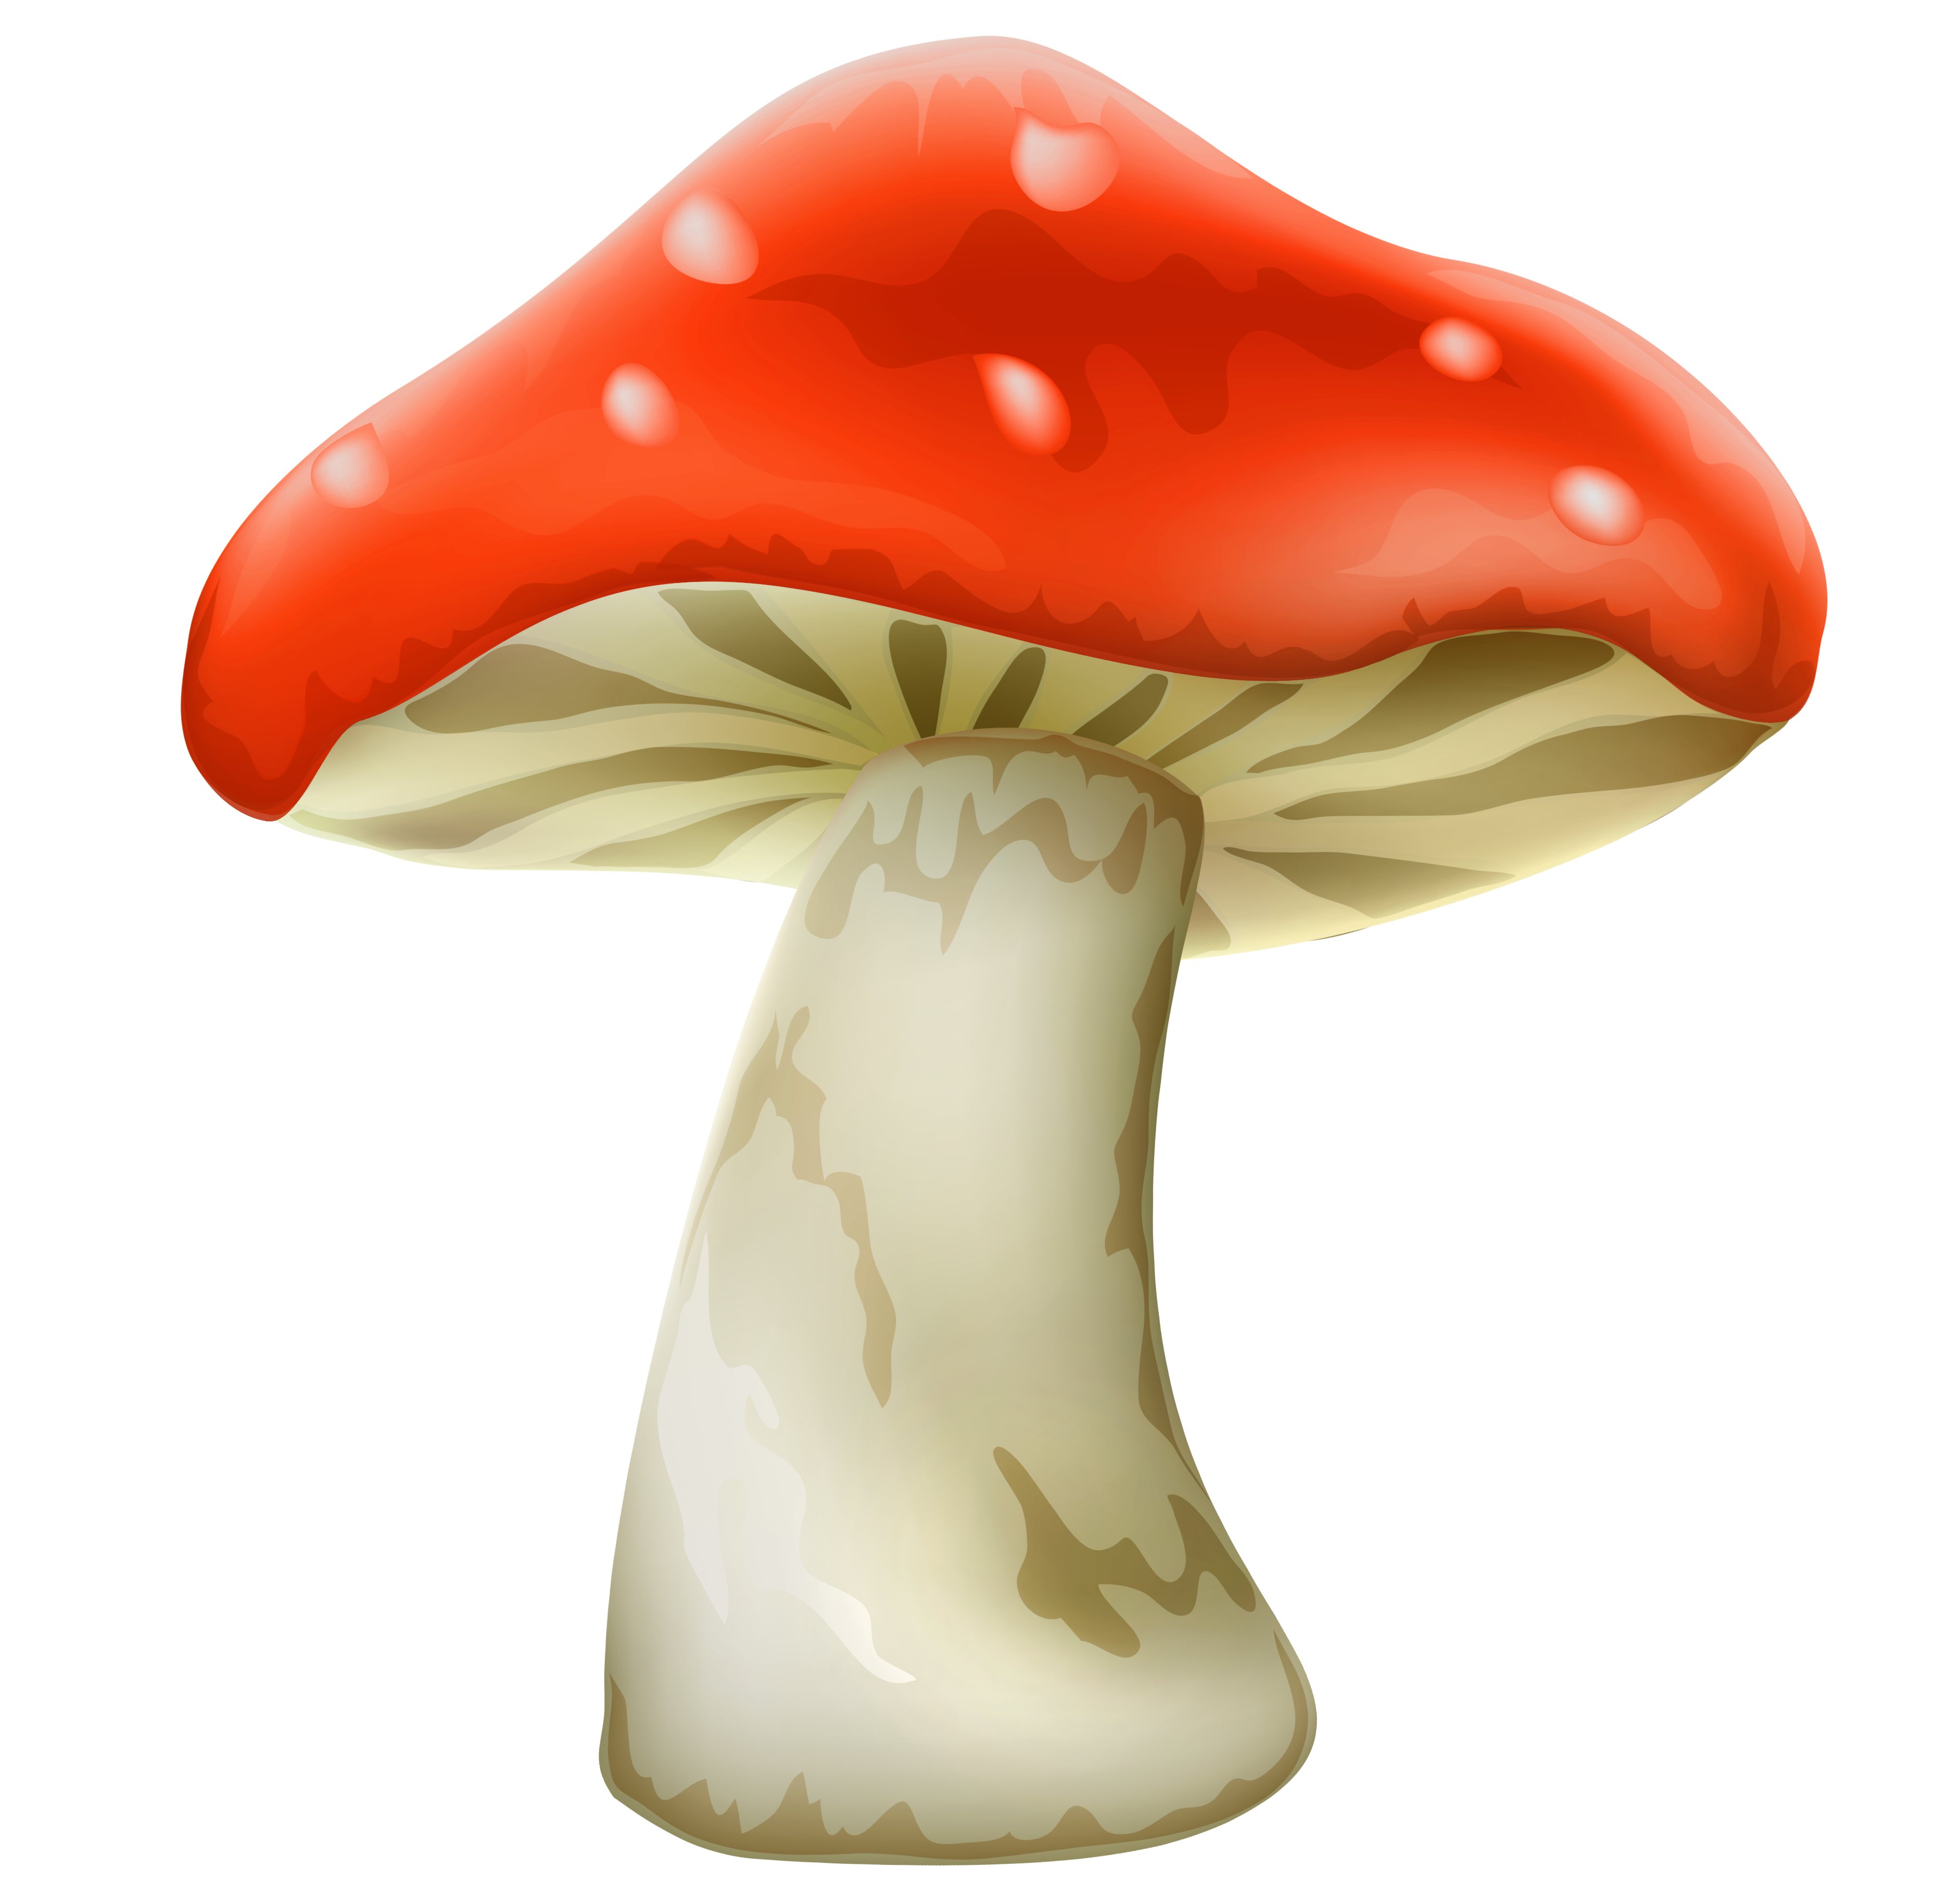 Mushroom PNG - 24337